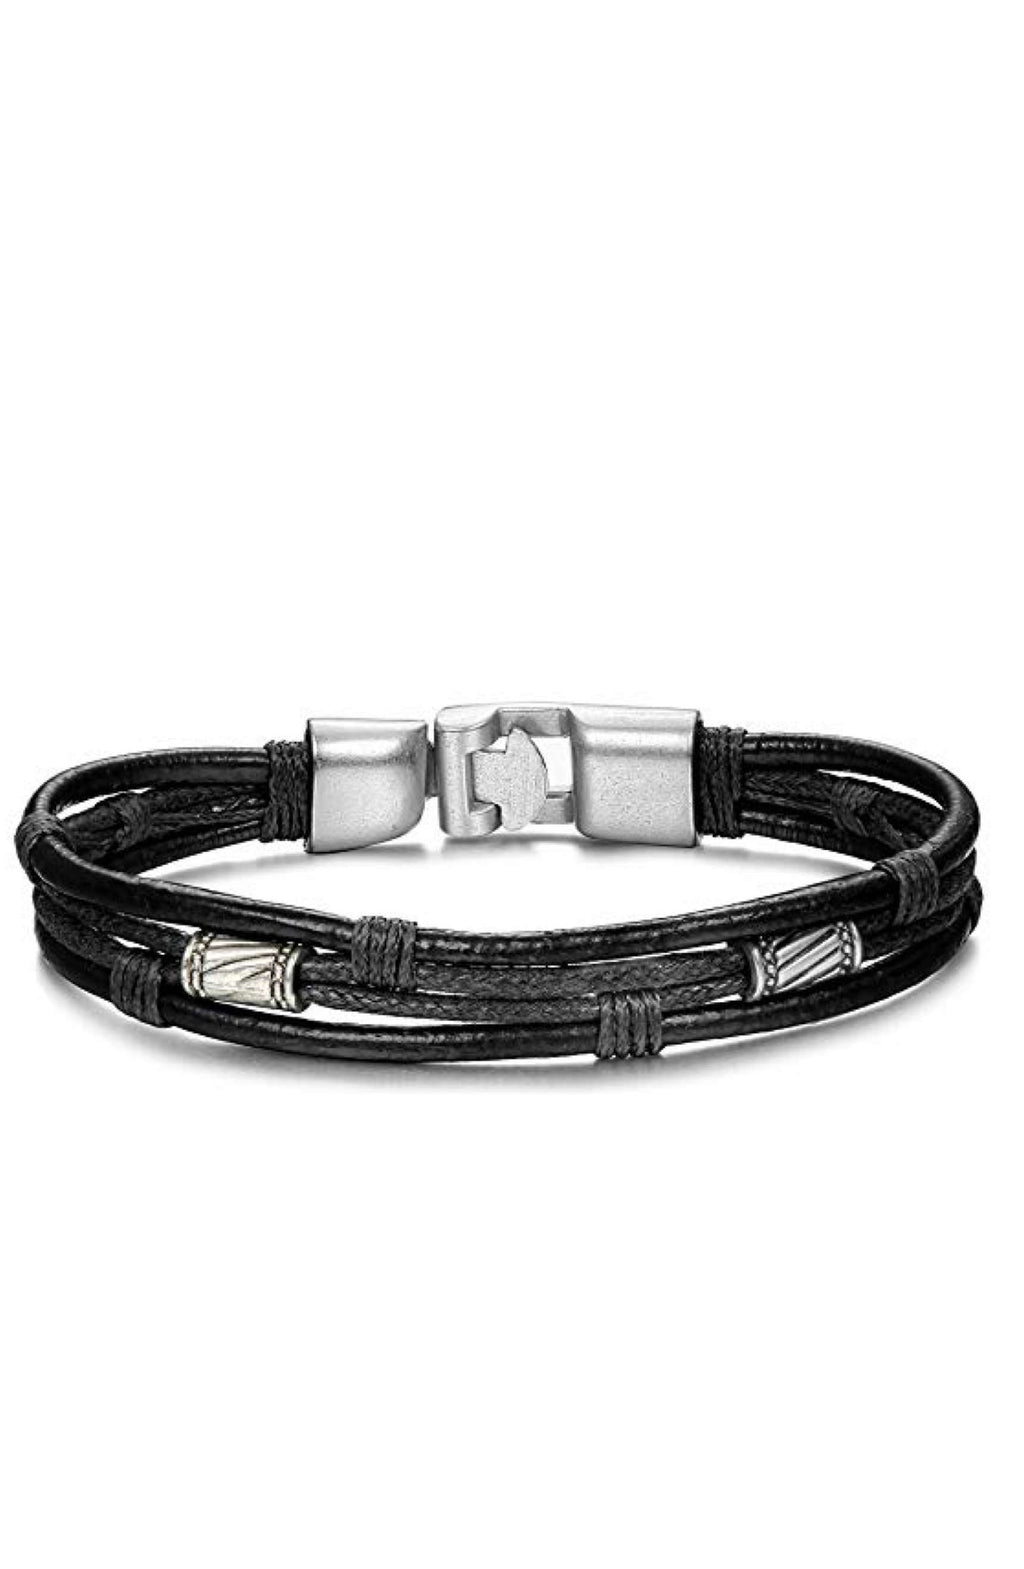 Silver & Black Leather Bracelet